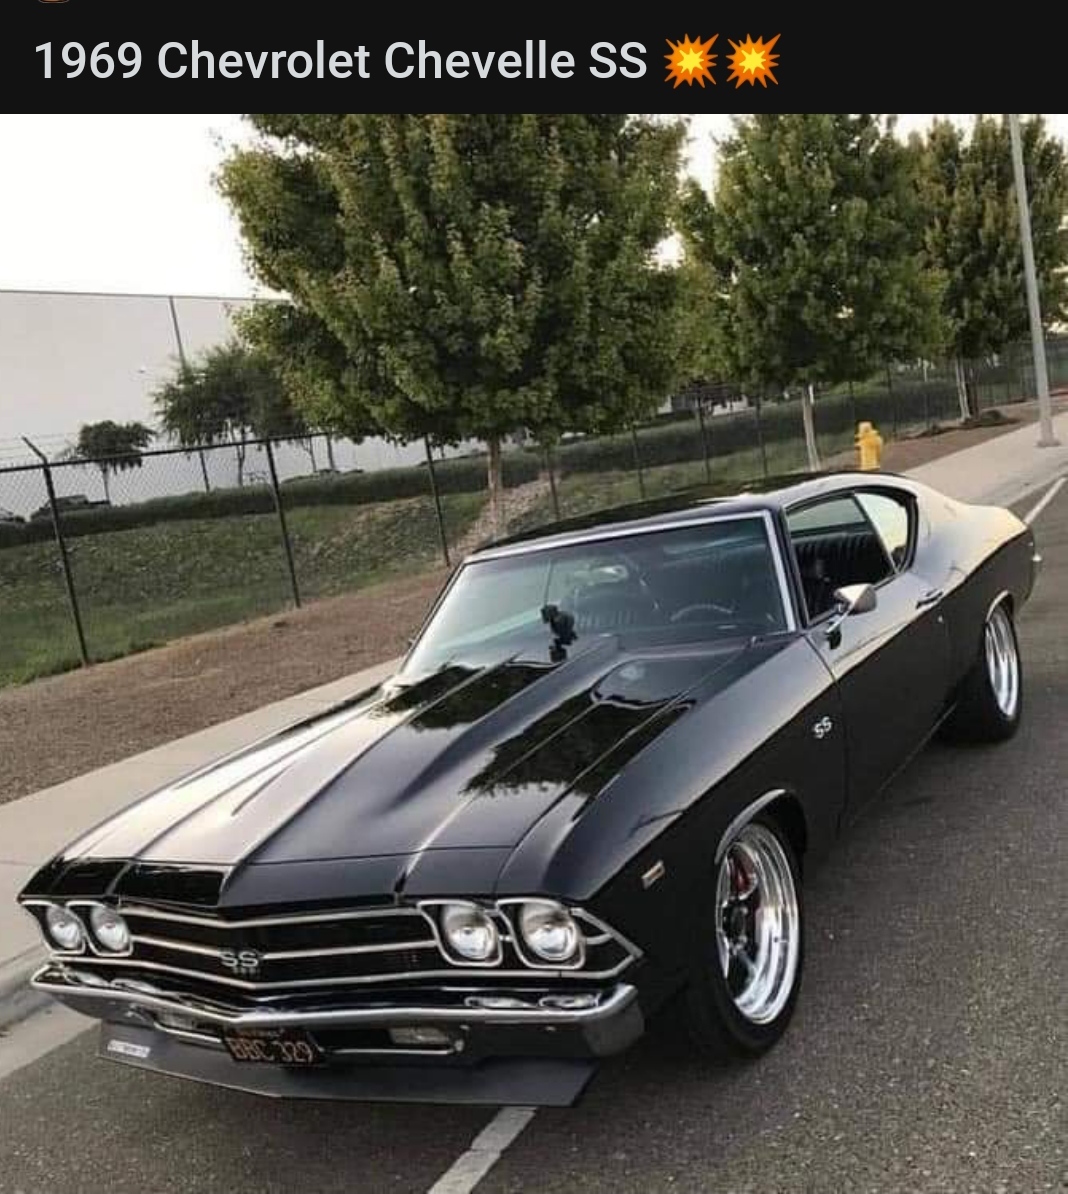 Авто сс. Chevrolet Chevelle 1969. Chevy Chevelle SS 1969. Шевроле Шевель 1969. Chevrolet Chevelle SS.